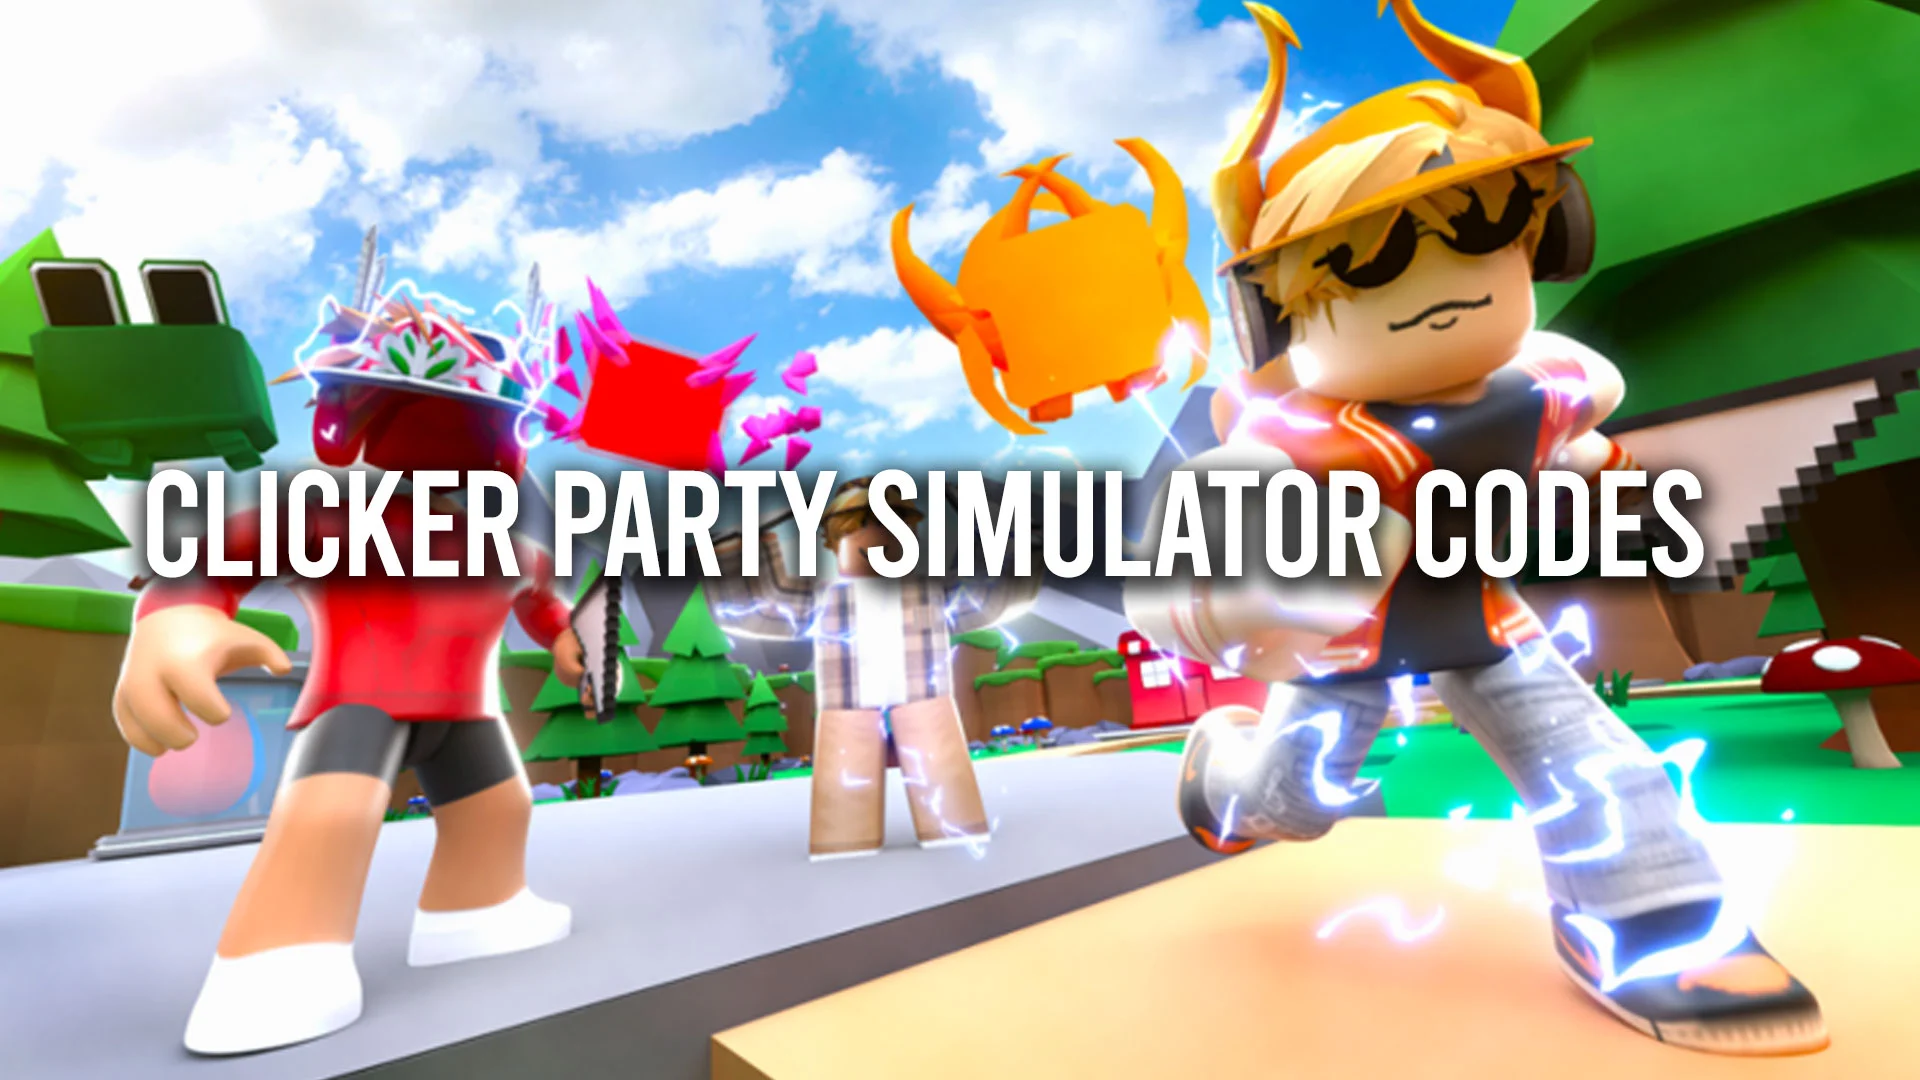 Clicker Party Simulator Codes